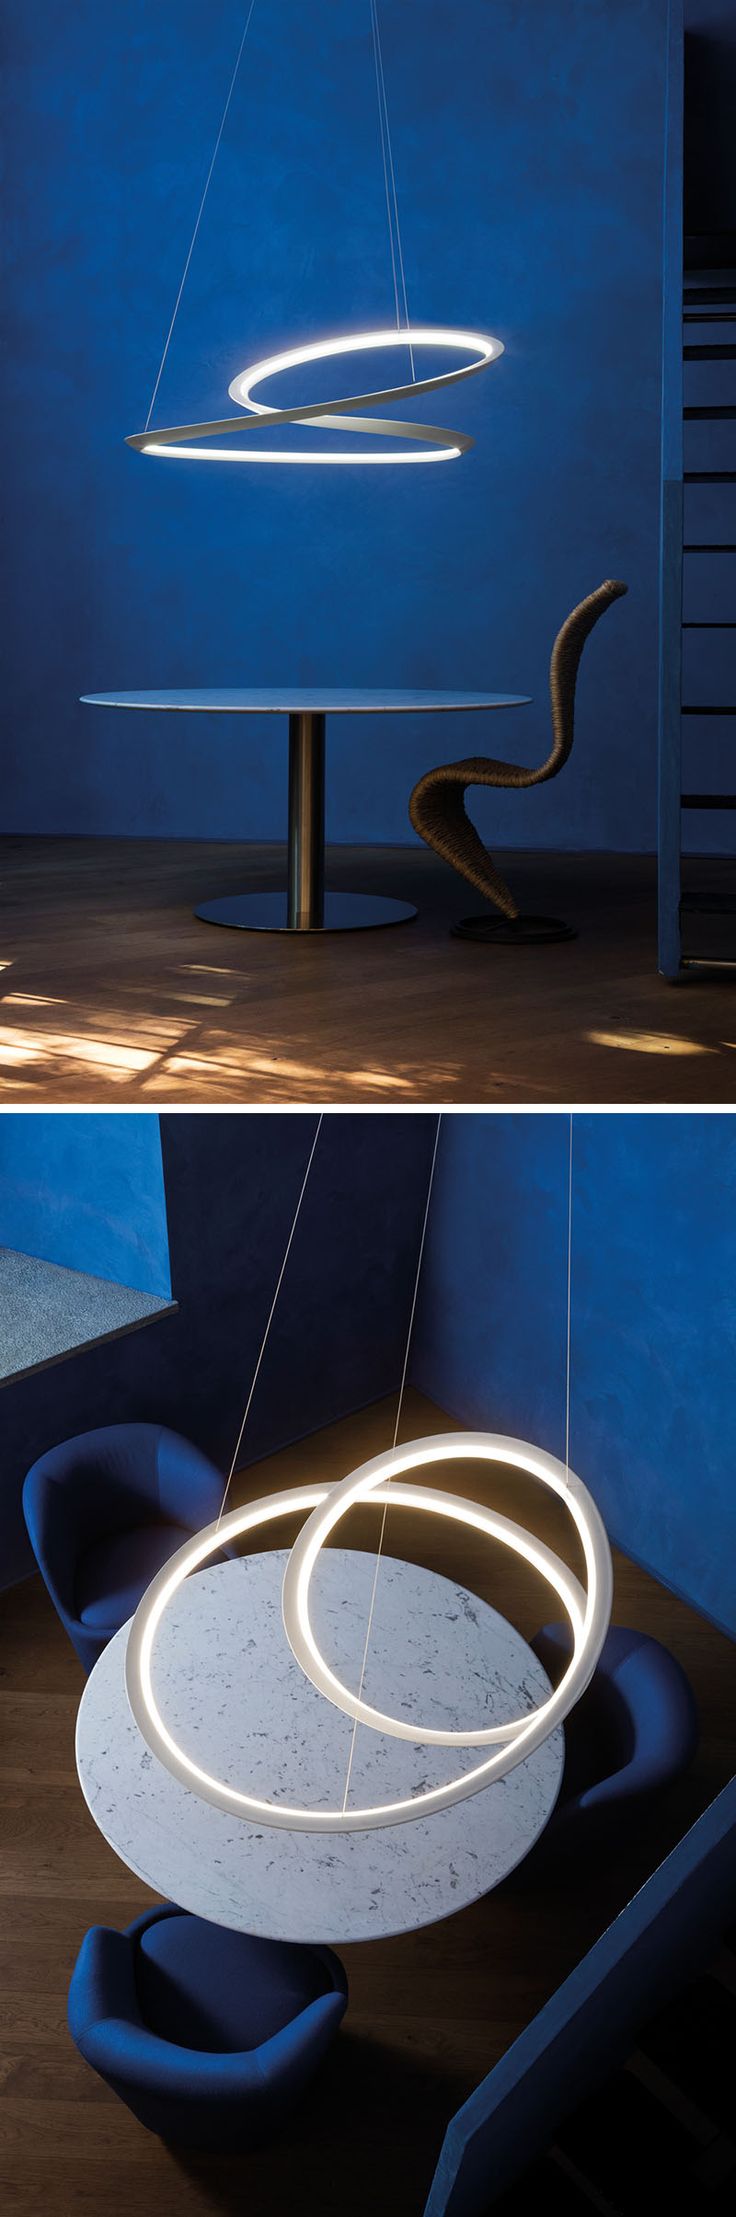 Light Design - Arihiro Miyake Creates A Sculptural Mobius Strip Inspired Lamp. D...